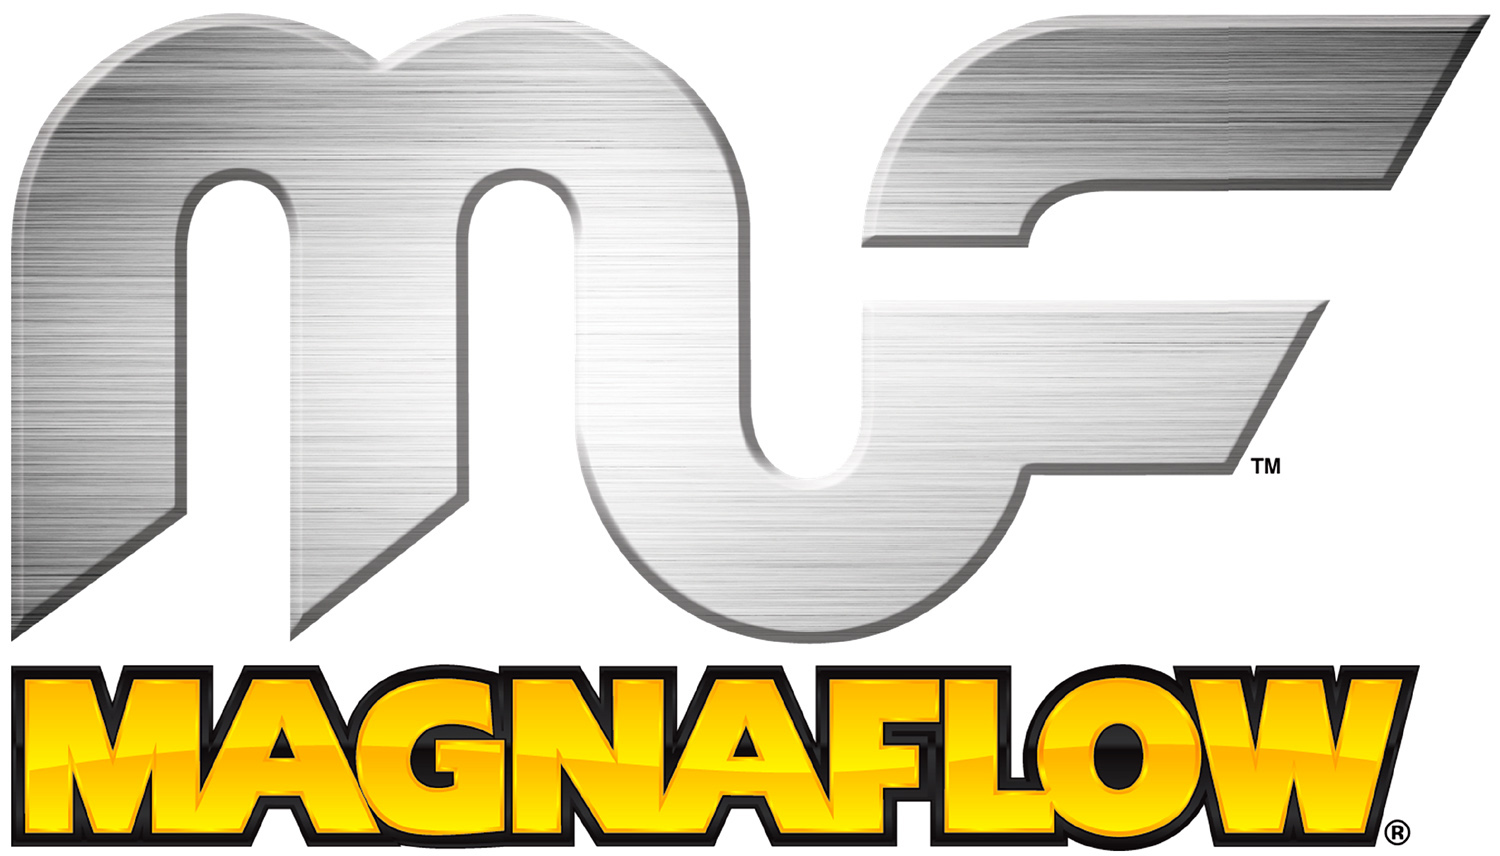 MagnaFlow Performance Exhaust Logo